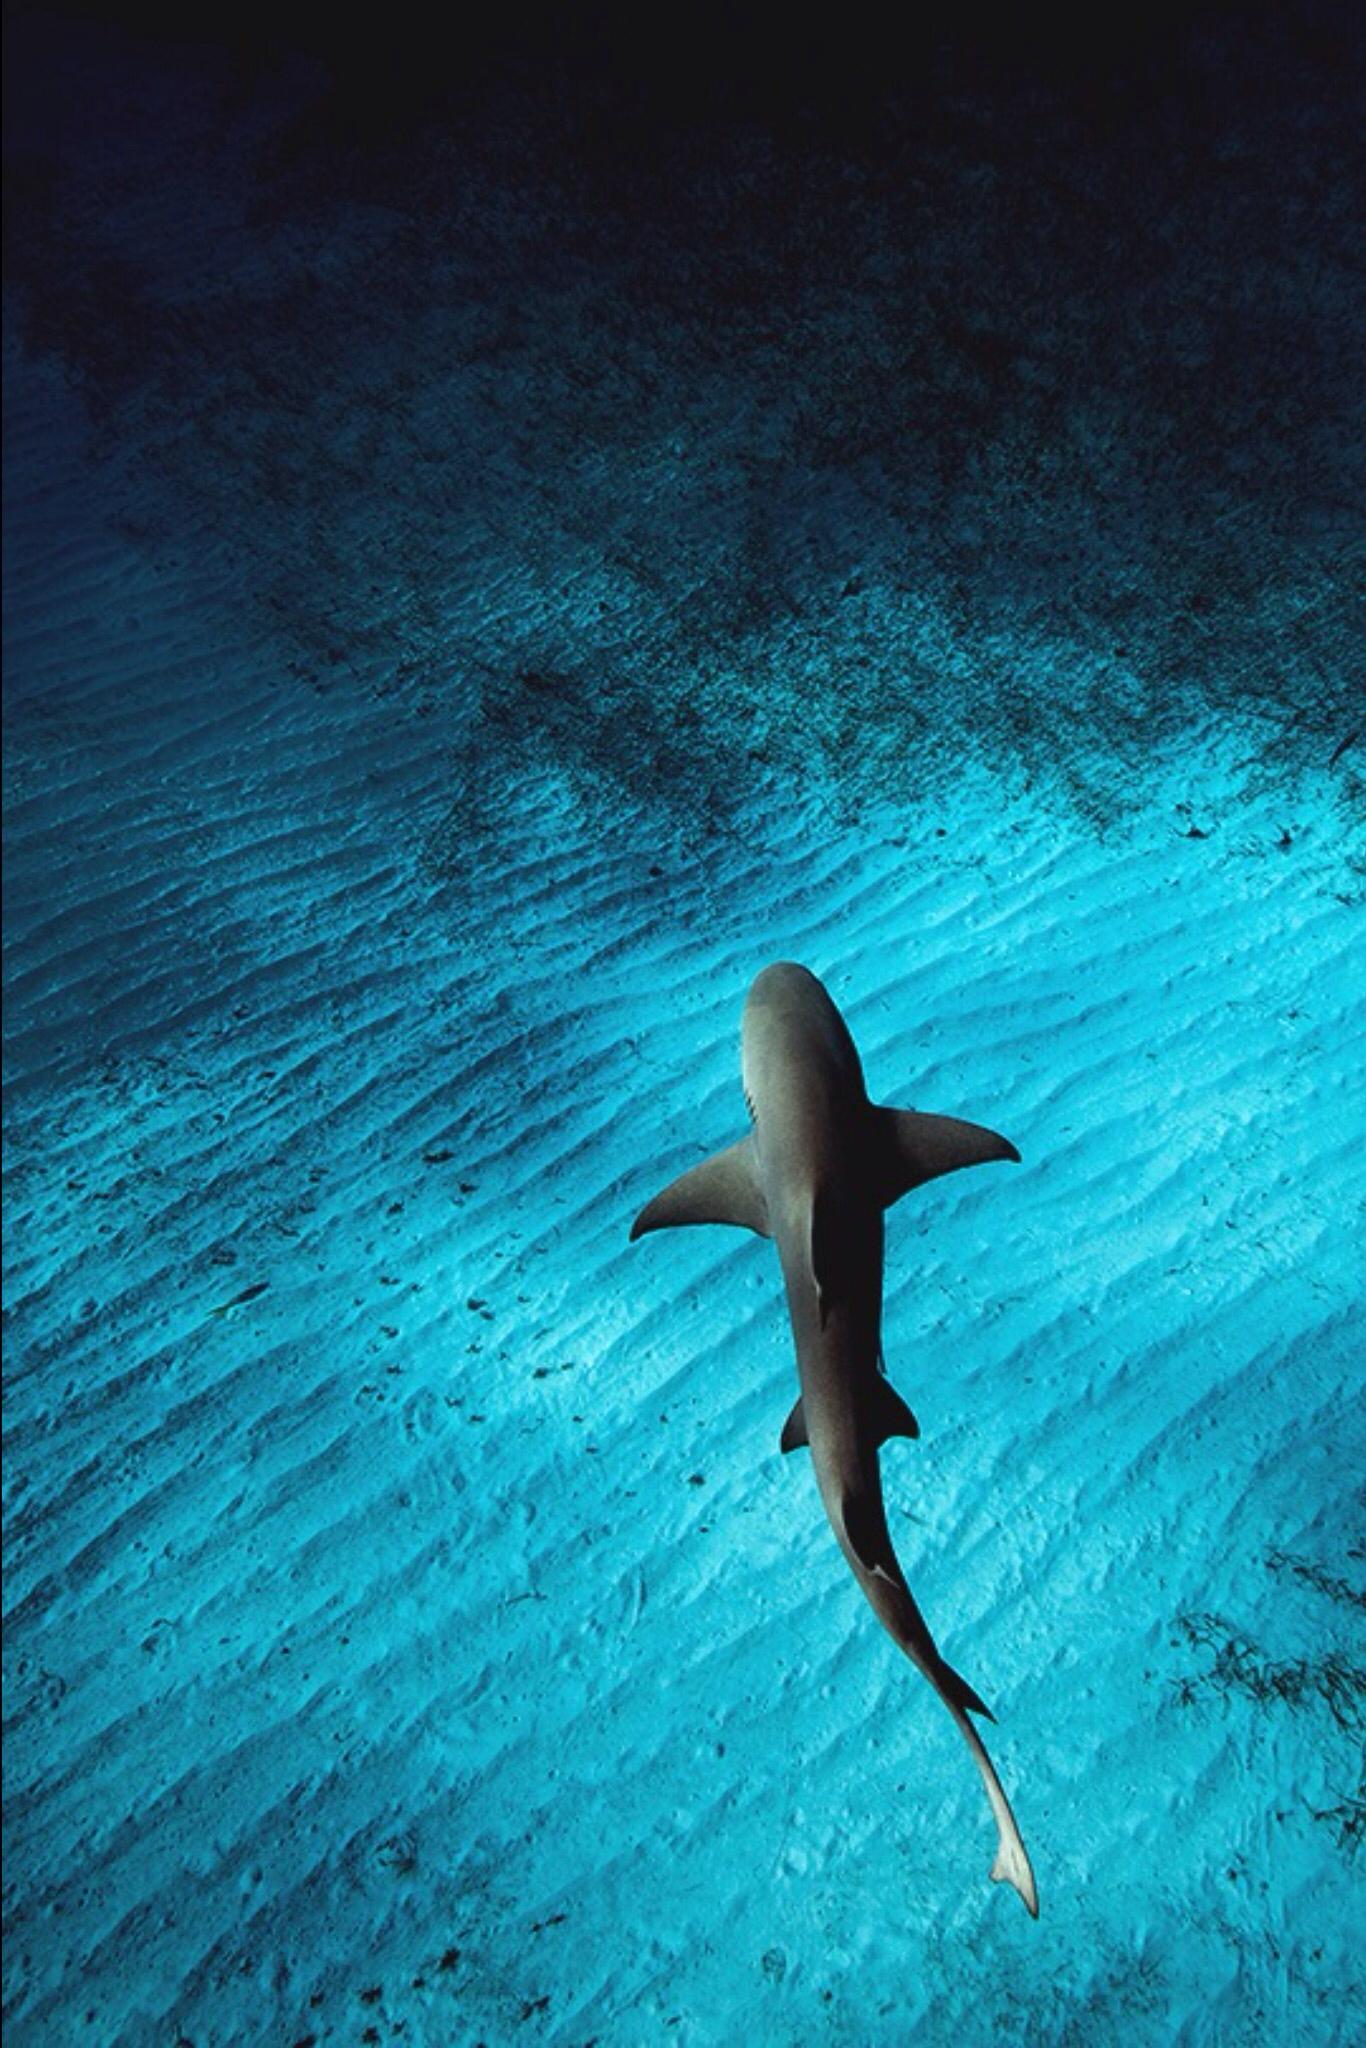 Wallpaper ID 449041  Animal Shark Phone Wallpaper Underwater Fish  720x1280 free download